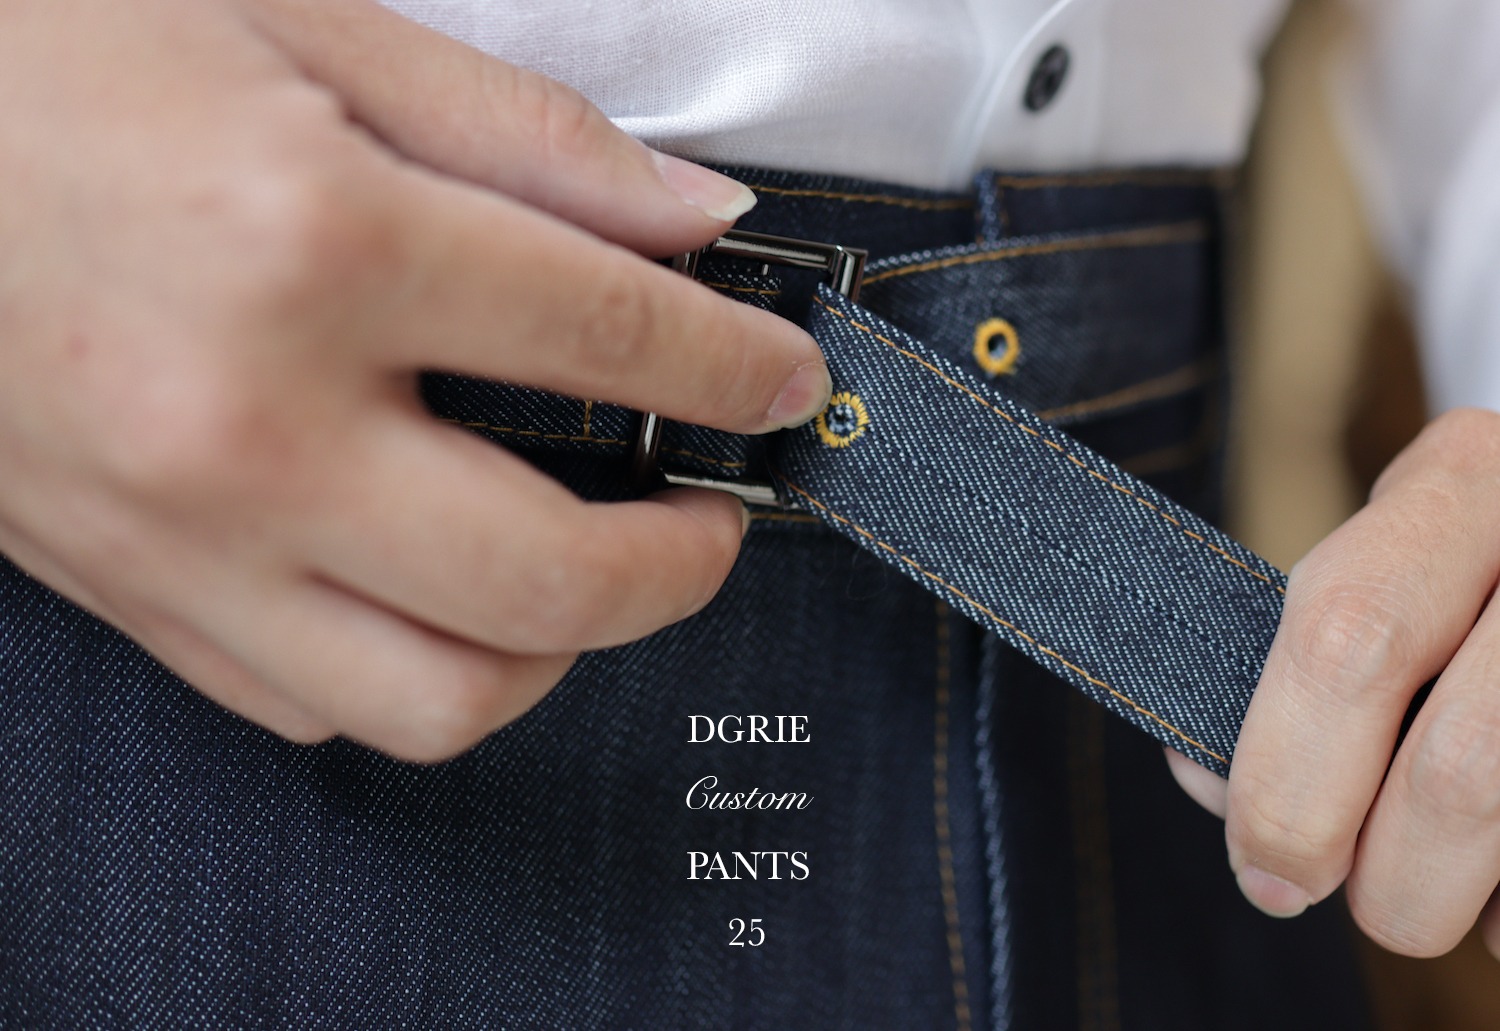 Customs by Vee - LV custom jeans 🔥